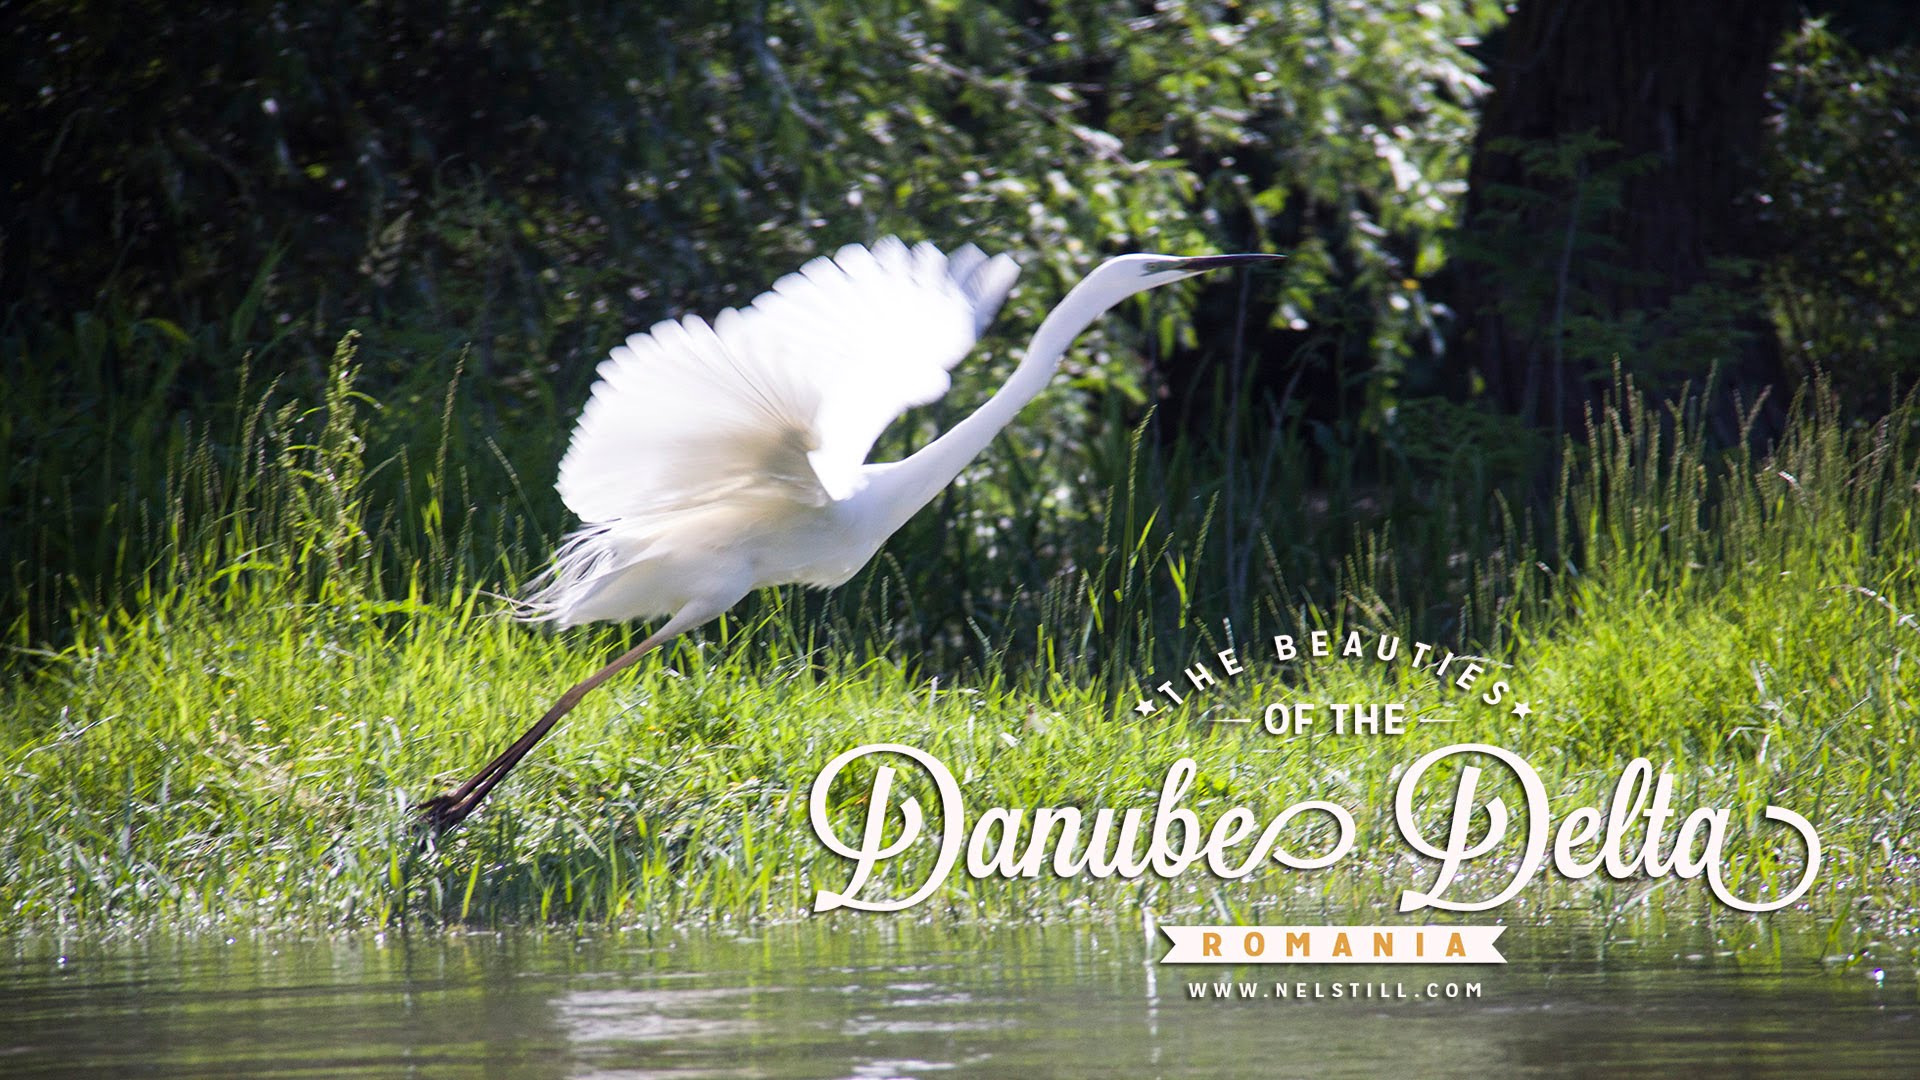 Discover the beauty of the Danube Delta Romania - YouTube